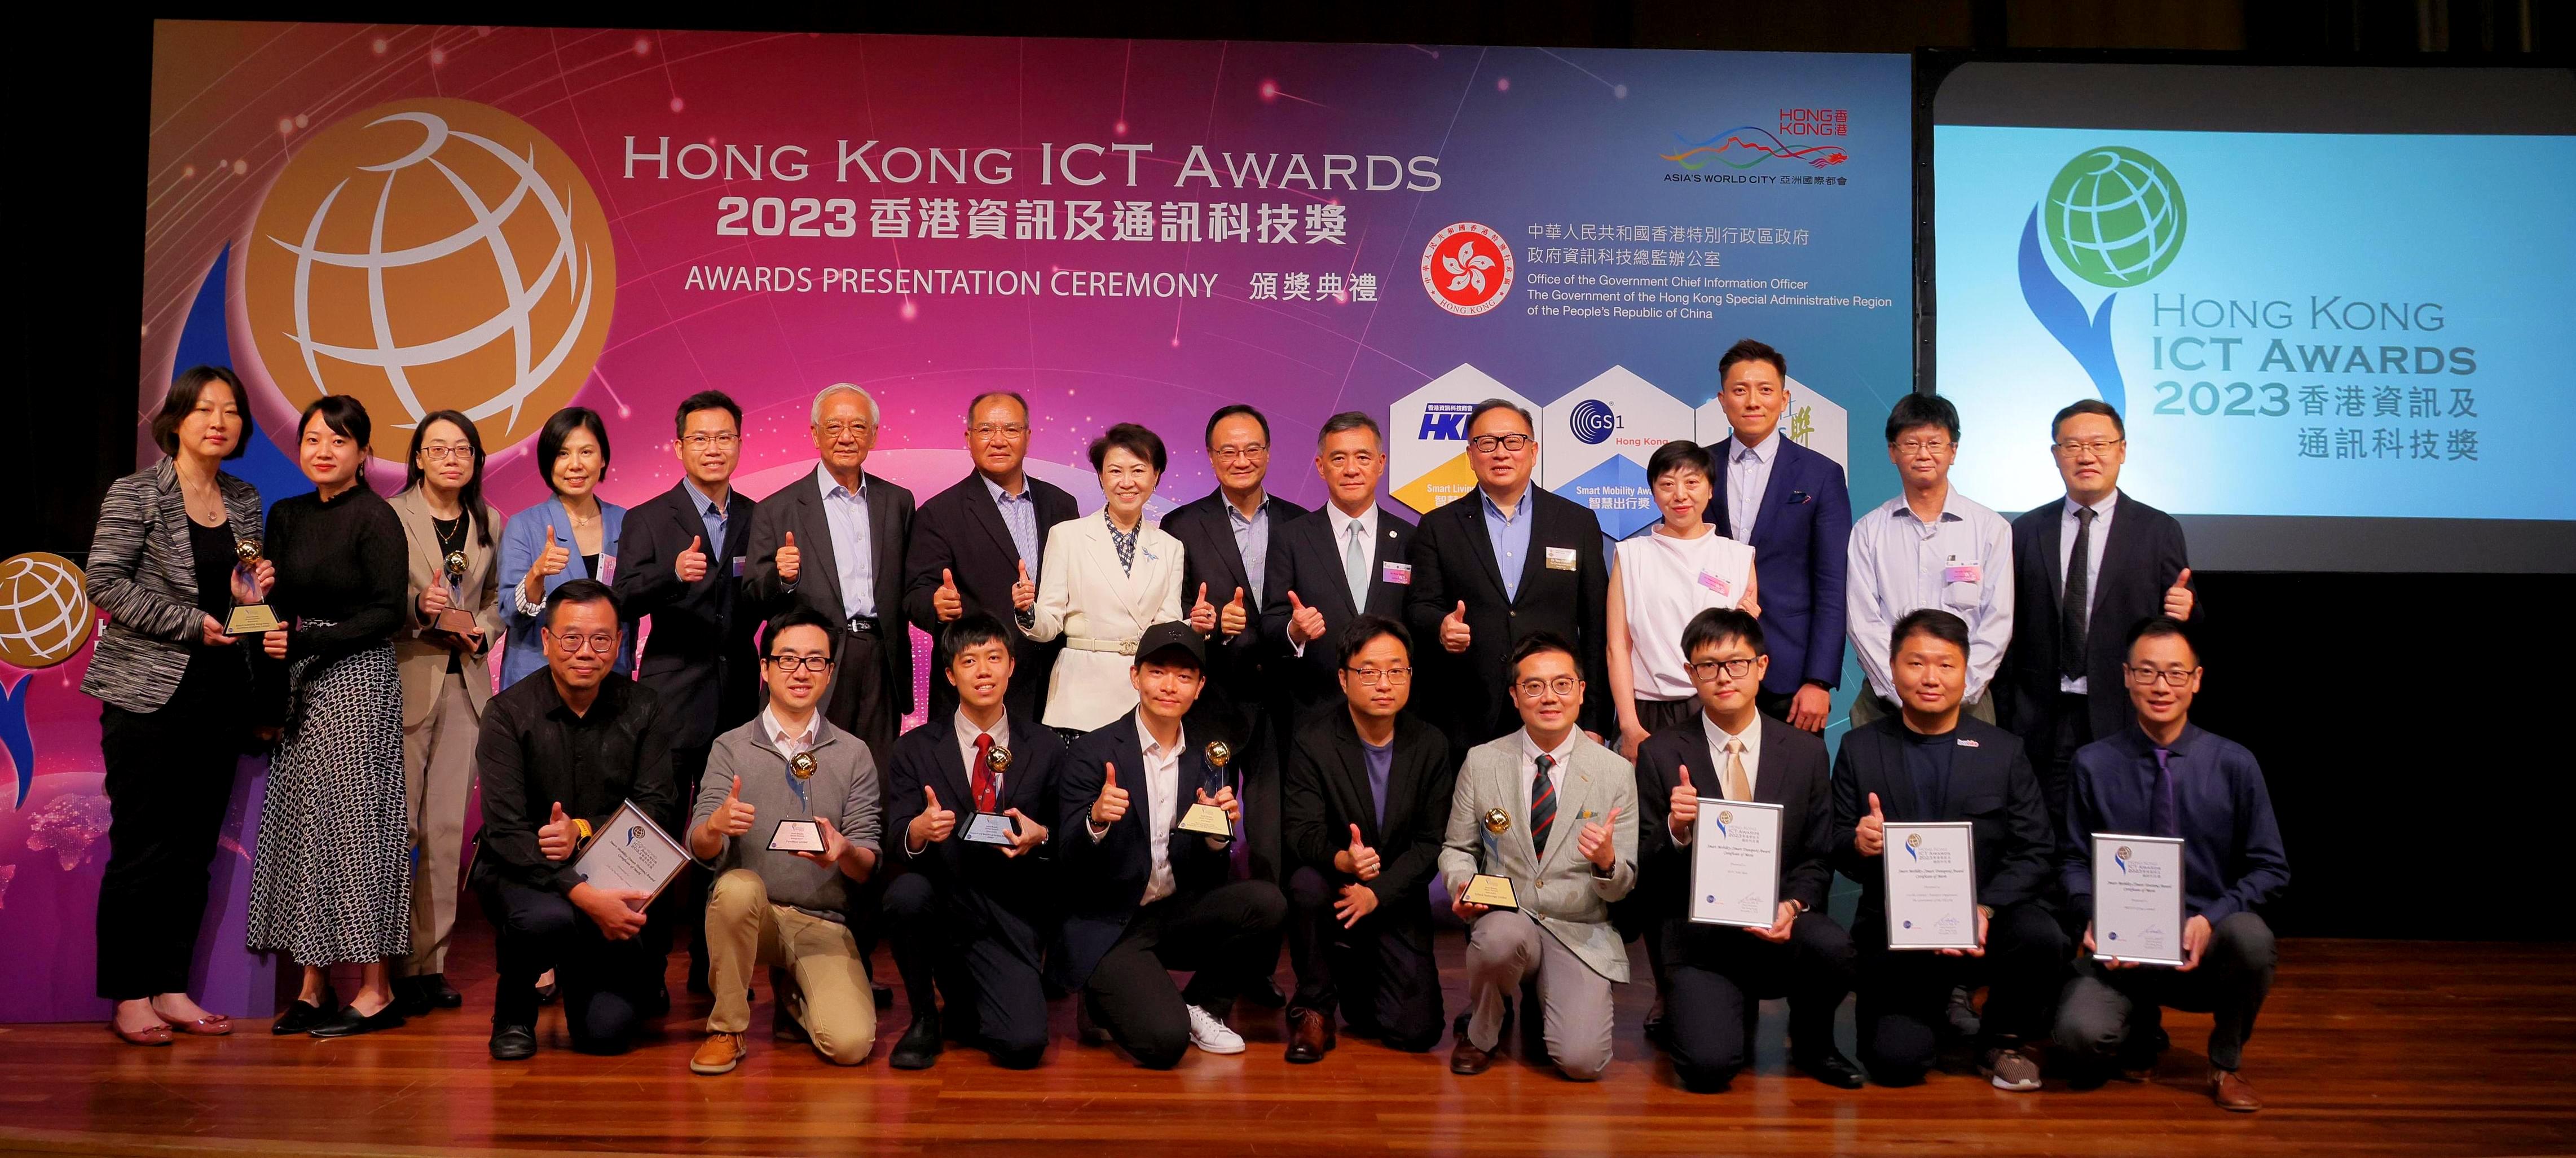 ICT award 2023 winners